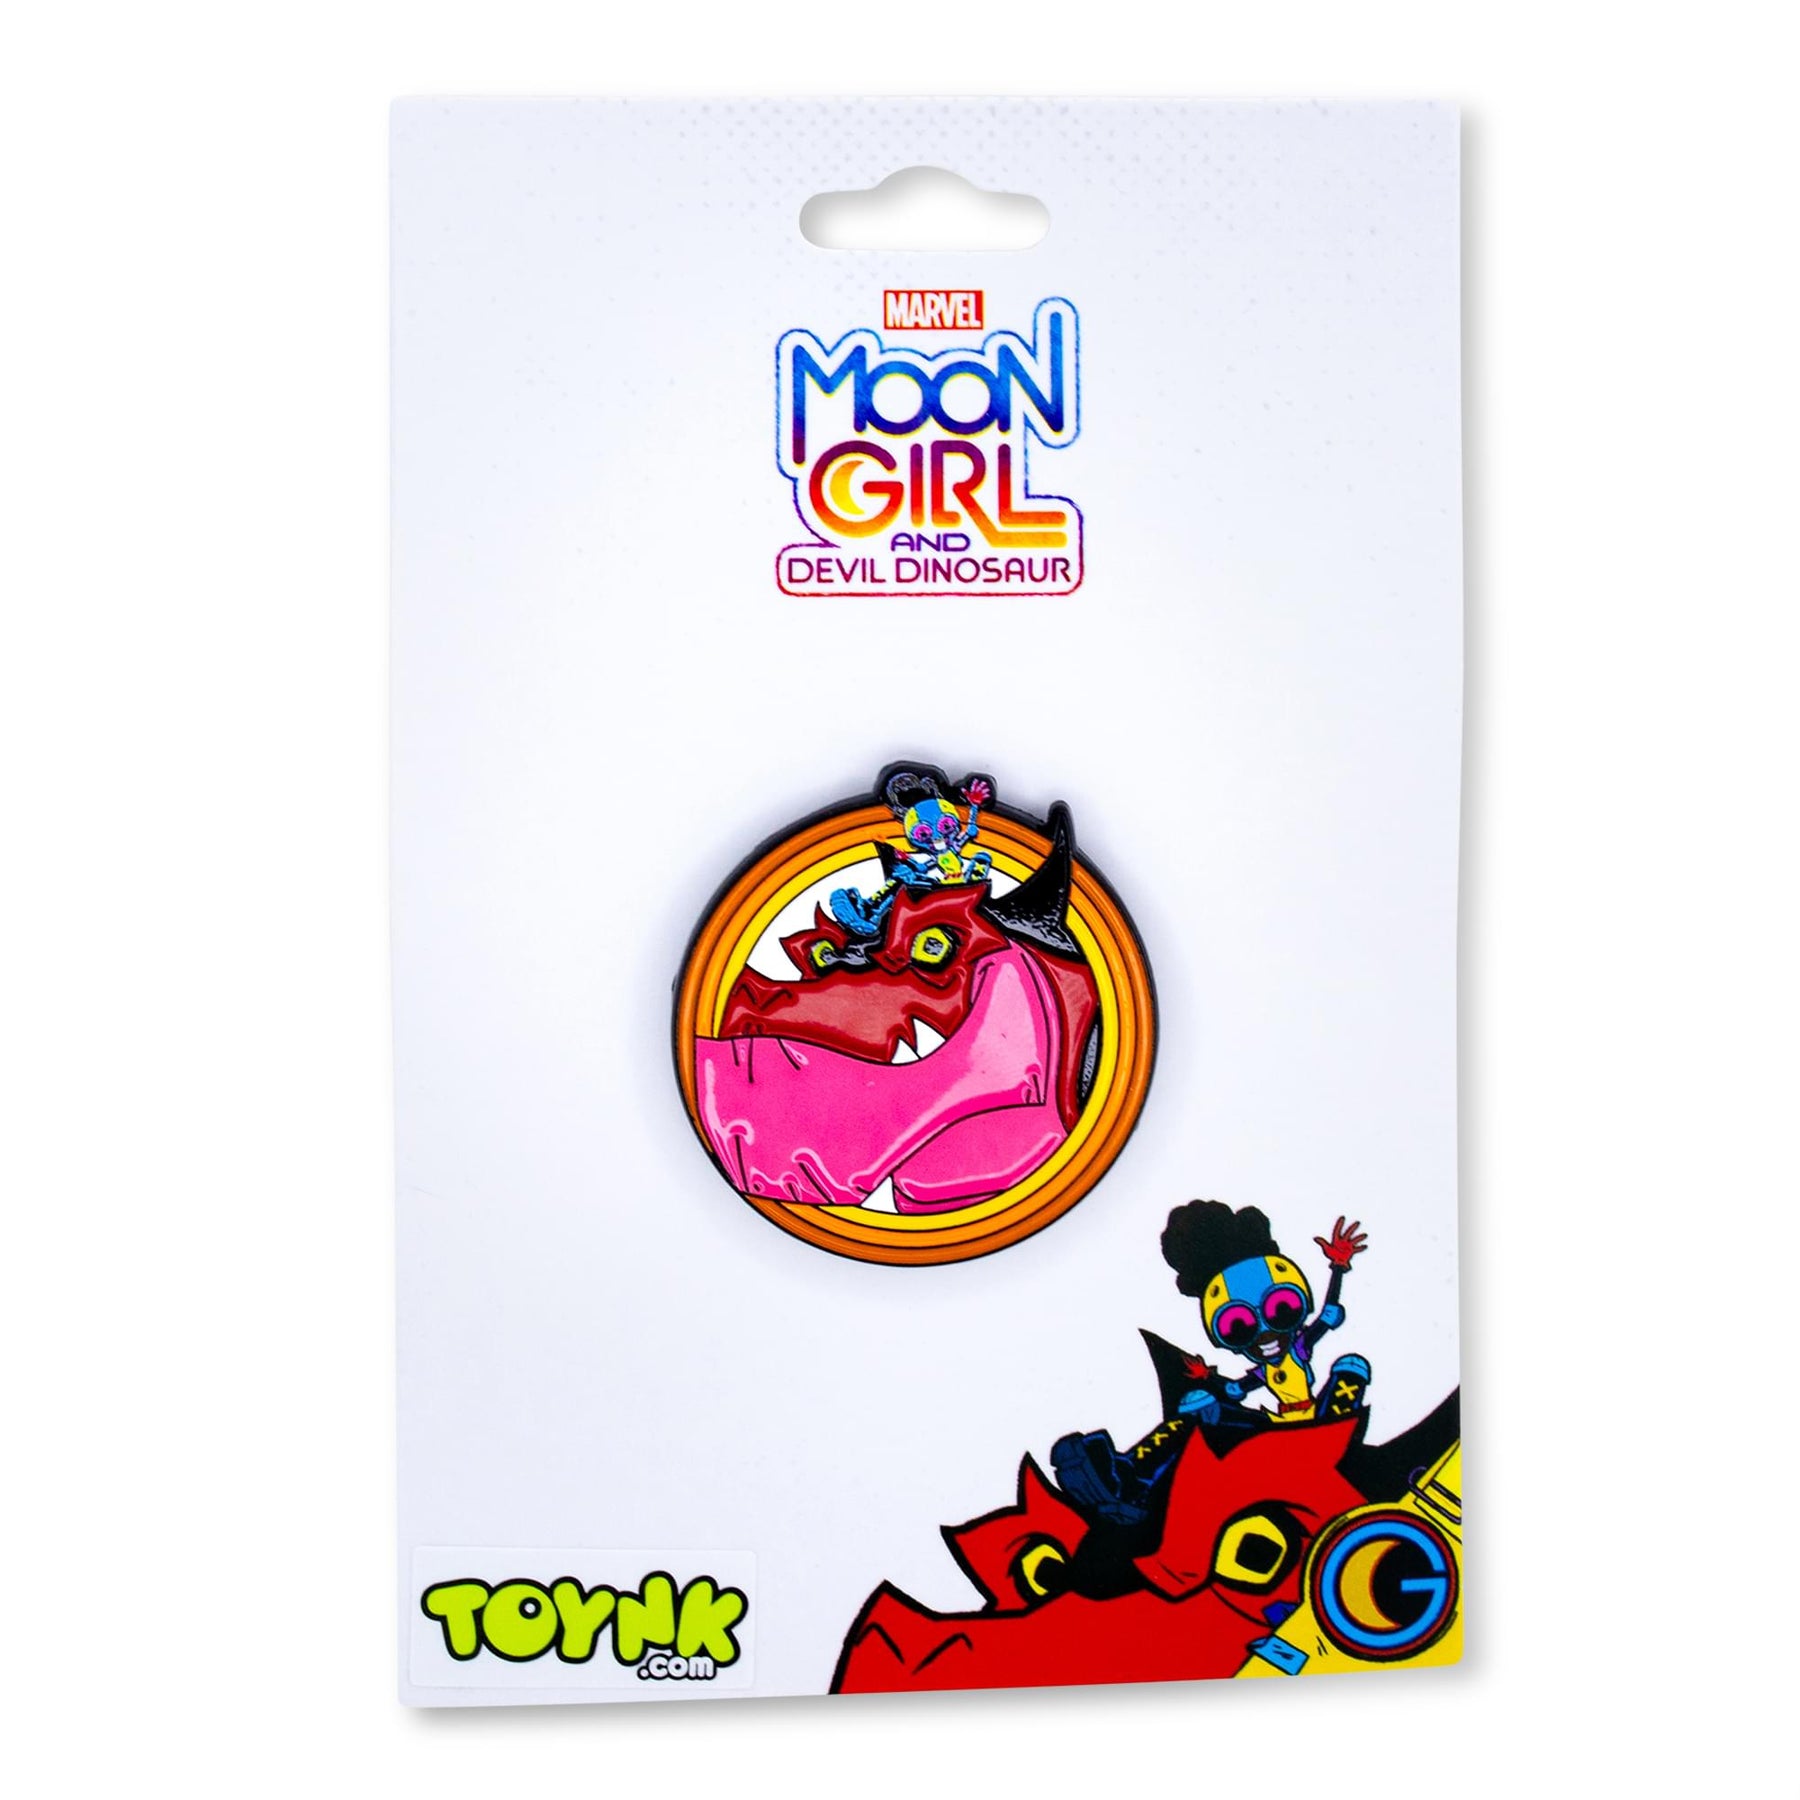 Marvel Moon Girl and Devil Dinosaur Enamel Pin | Toynk Exclusive